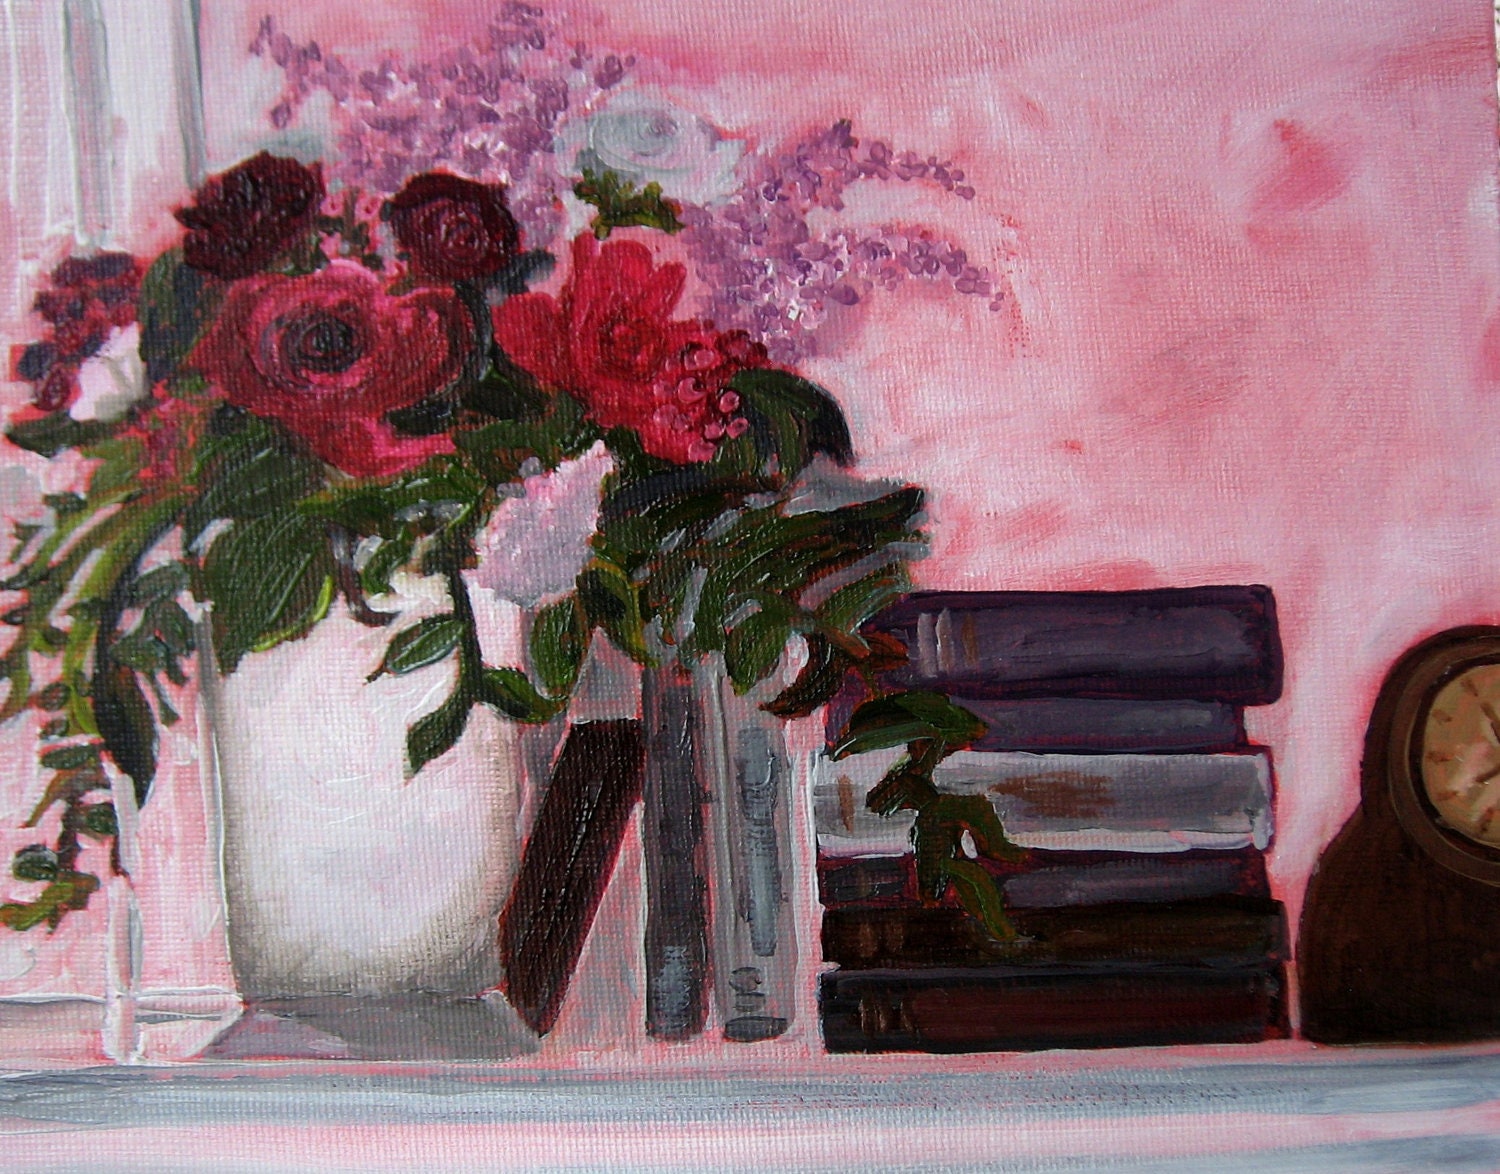 Roses and Books, oil painting, still life, original, flowers, clocks, books, painting, decor, handmade - maureencarrigan